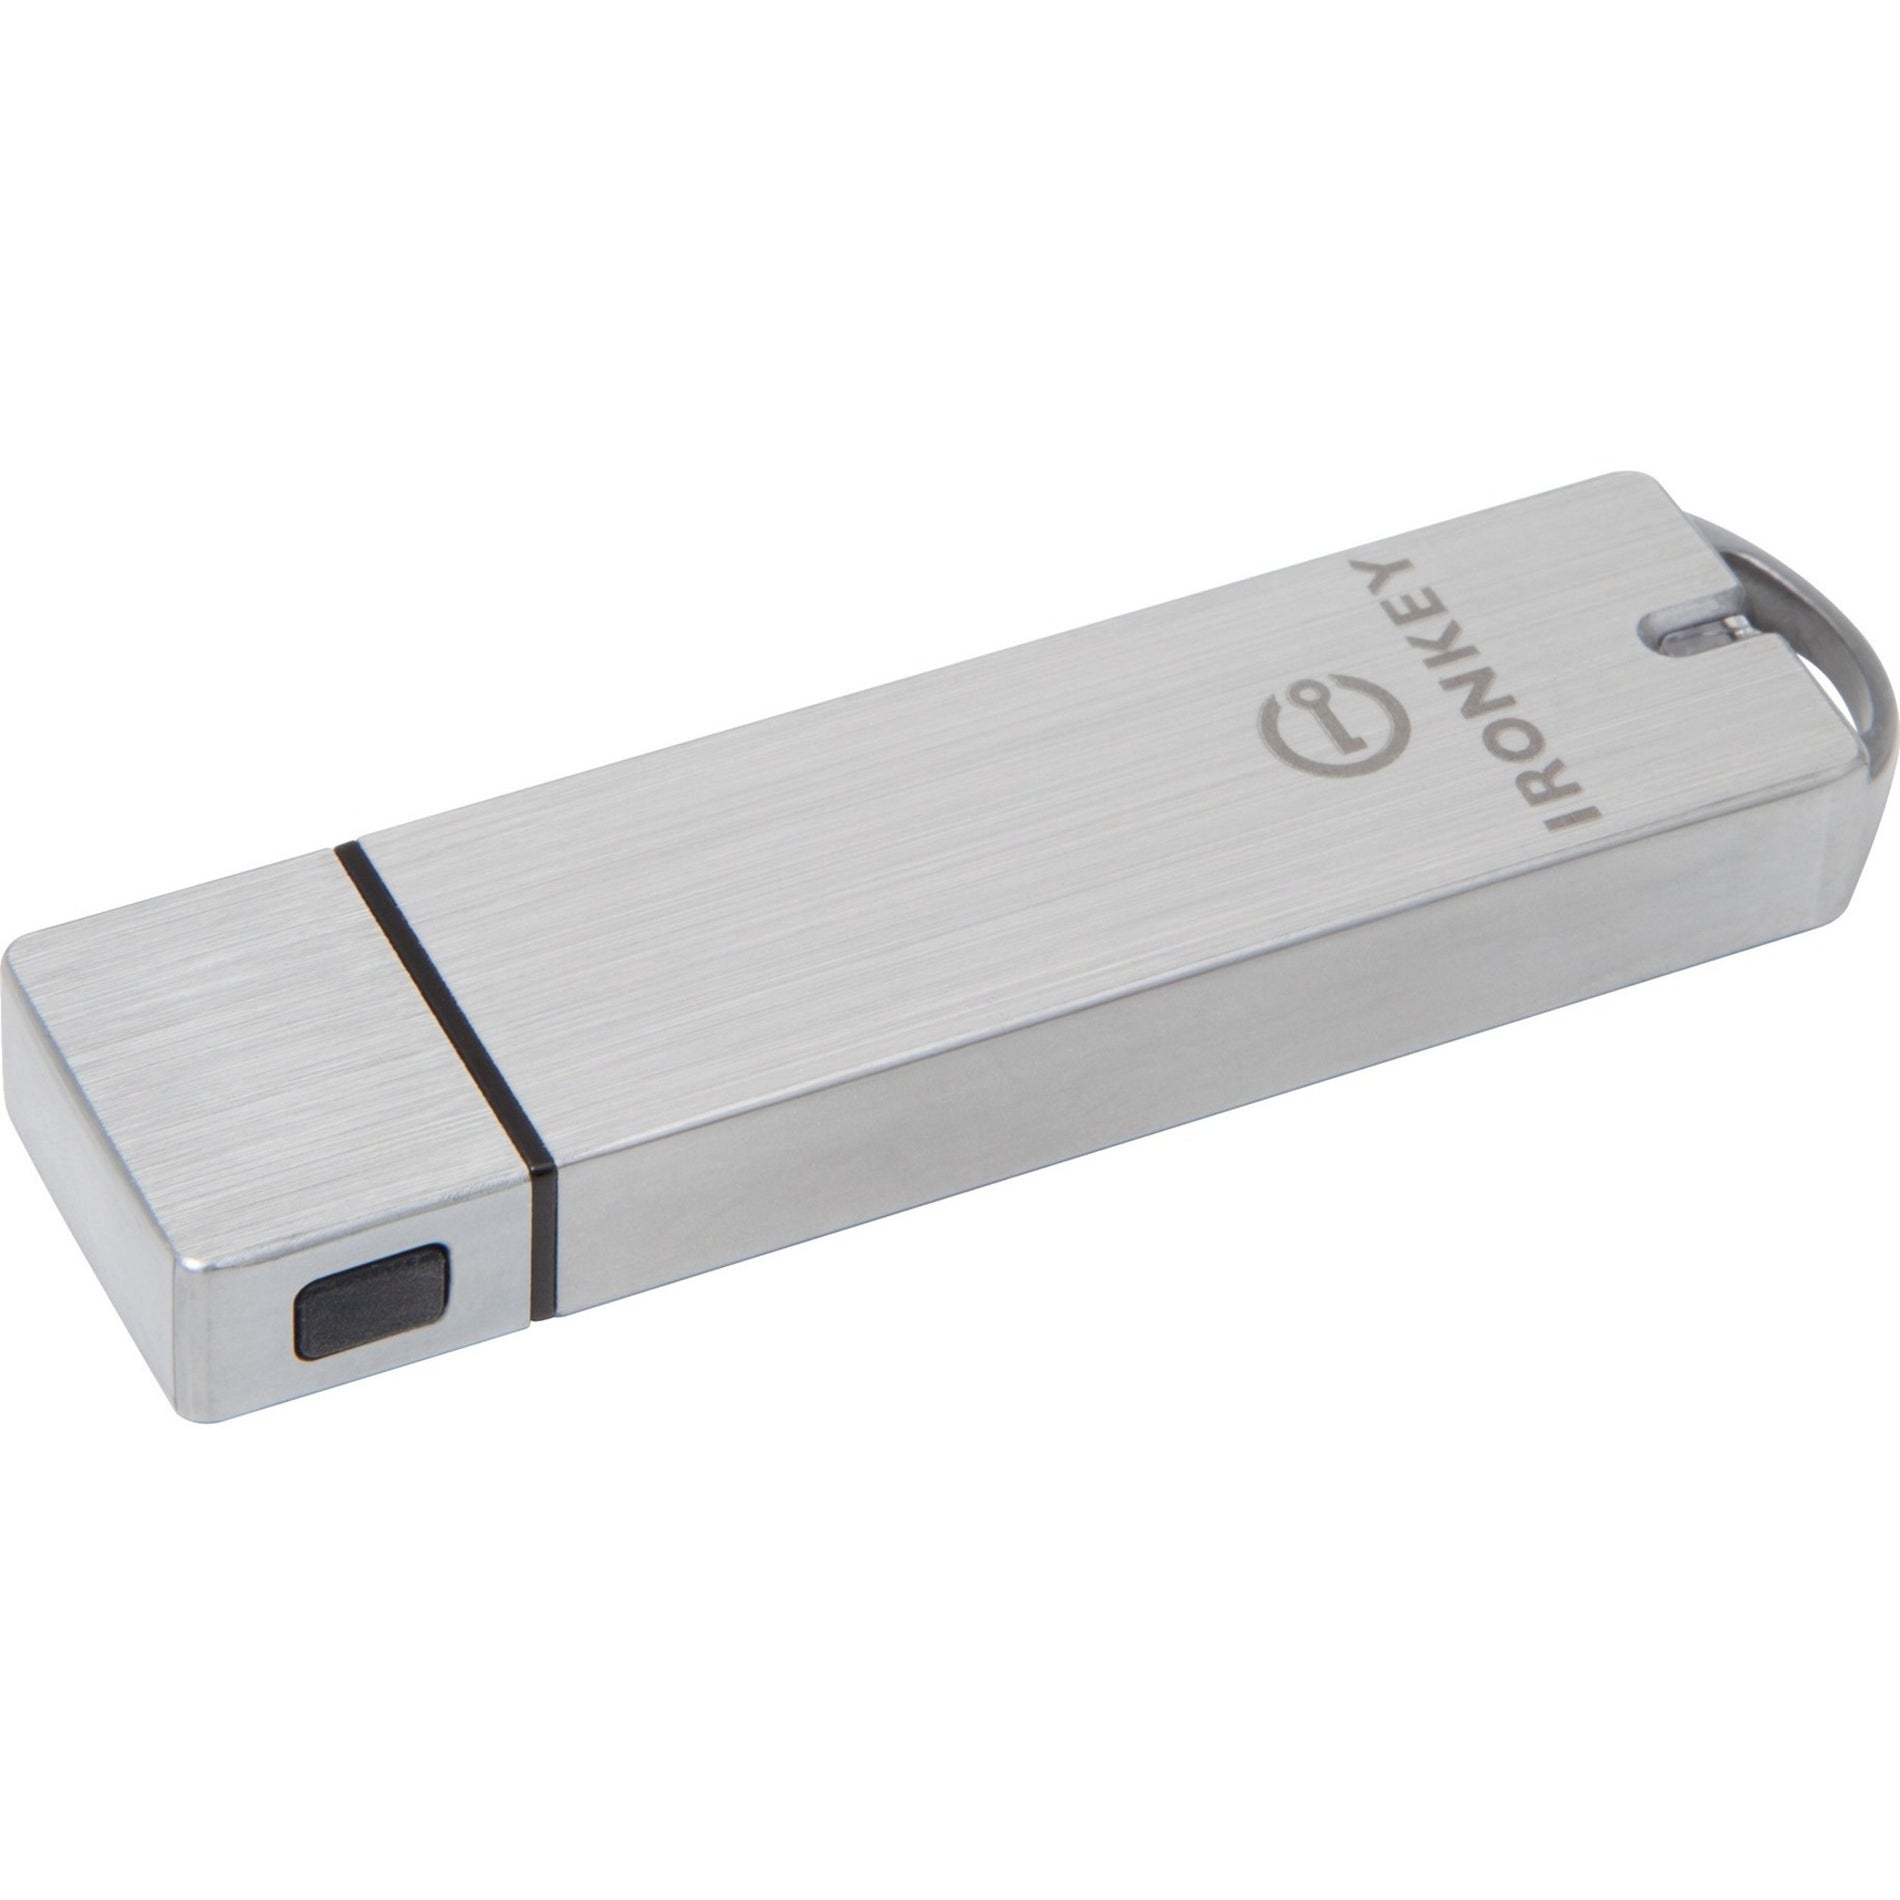 IronKey IKS1000B/128GB Basic S1000 Encrypted Flash Drive, 128GB USB 3.0, 256-bit AES